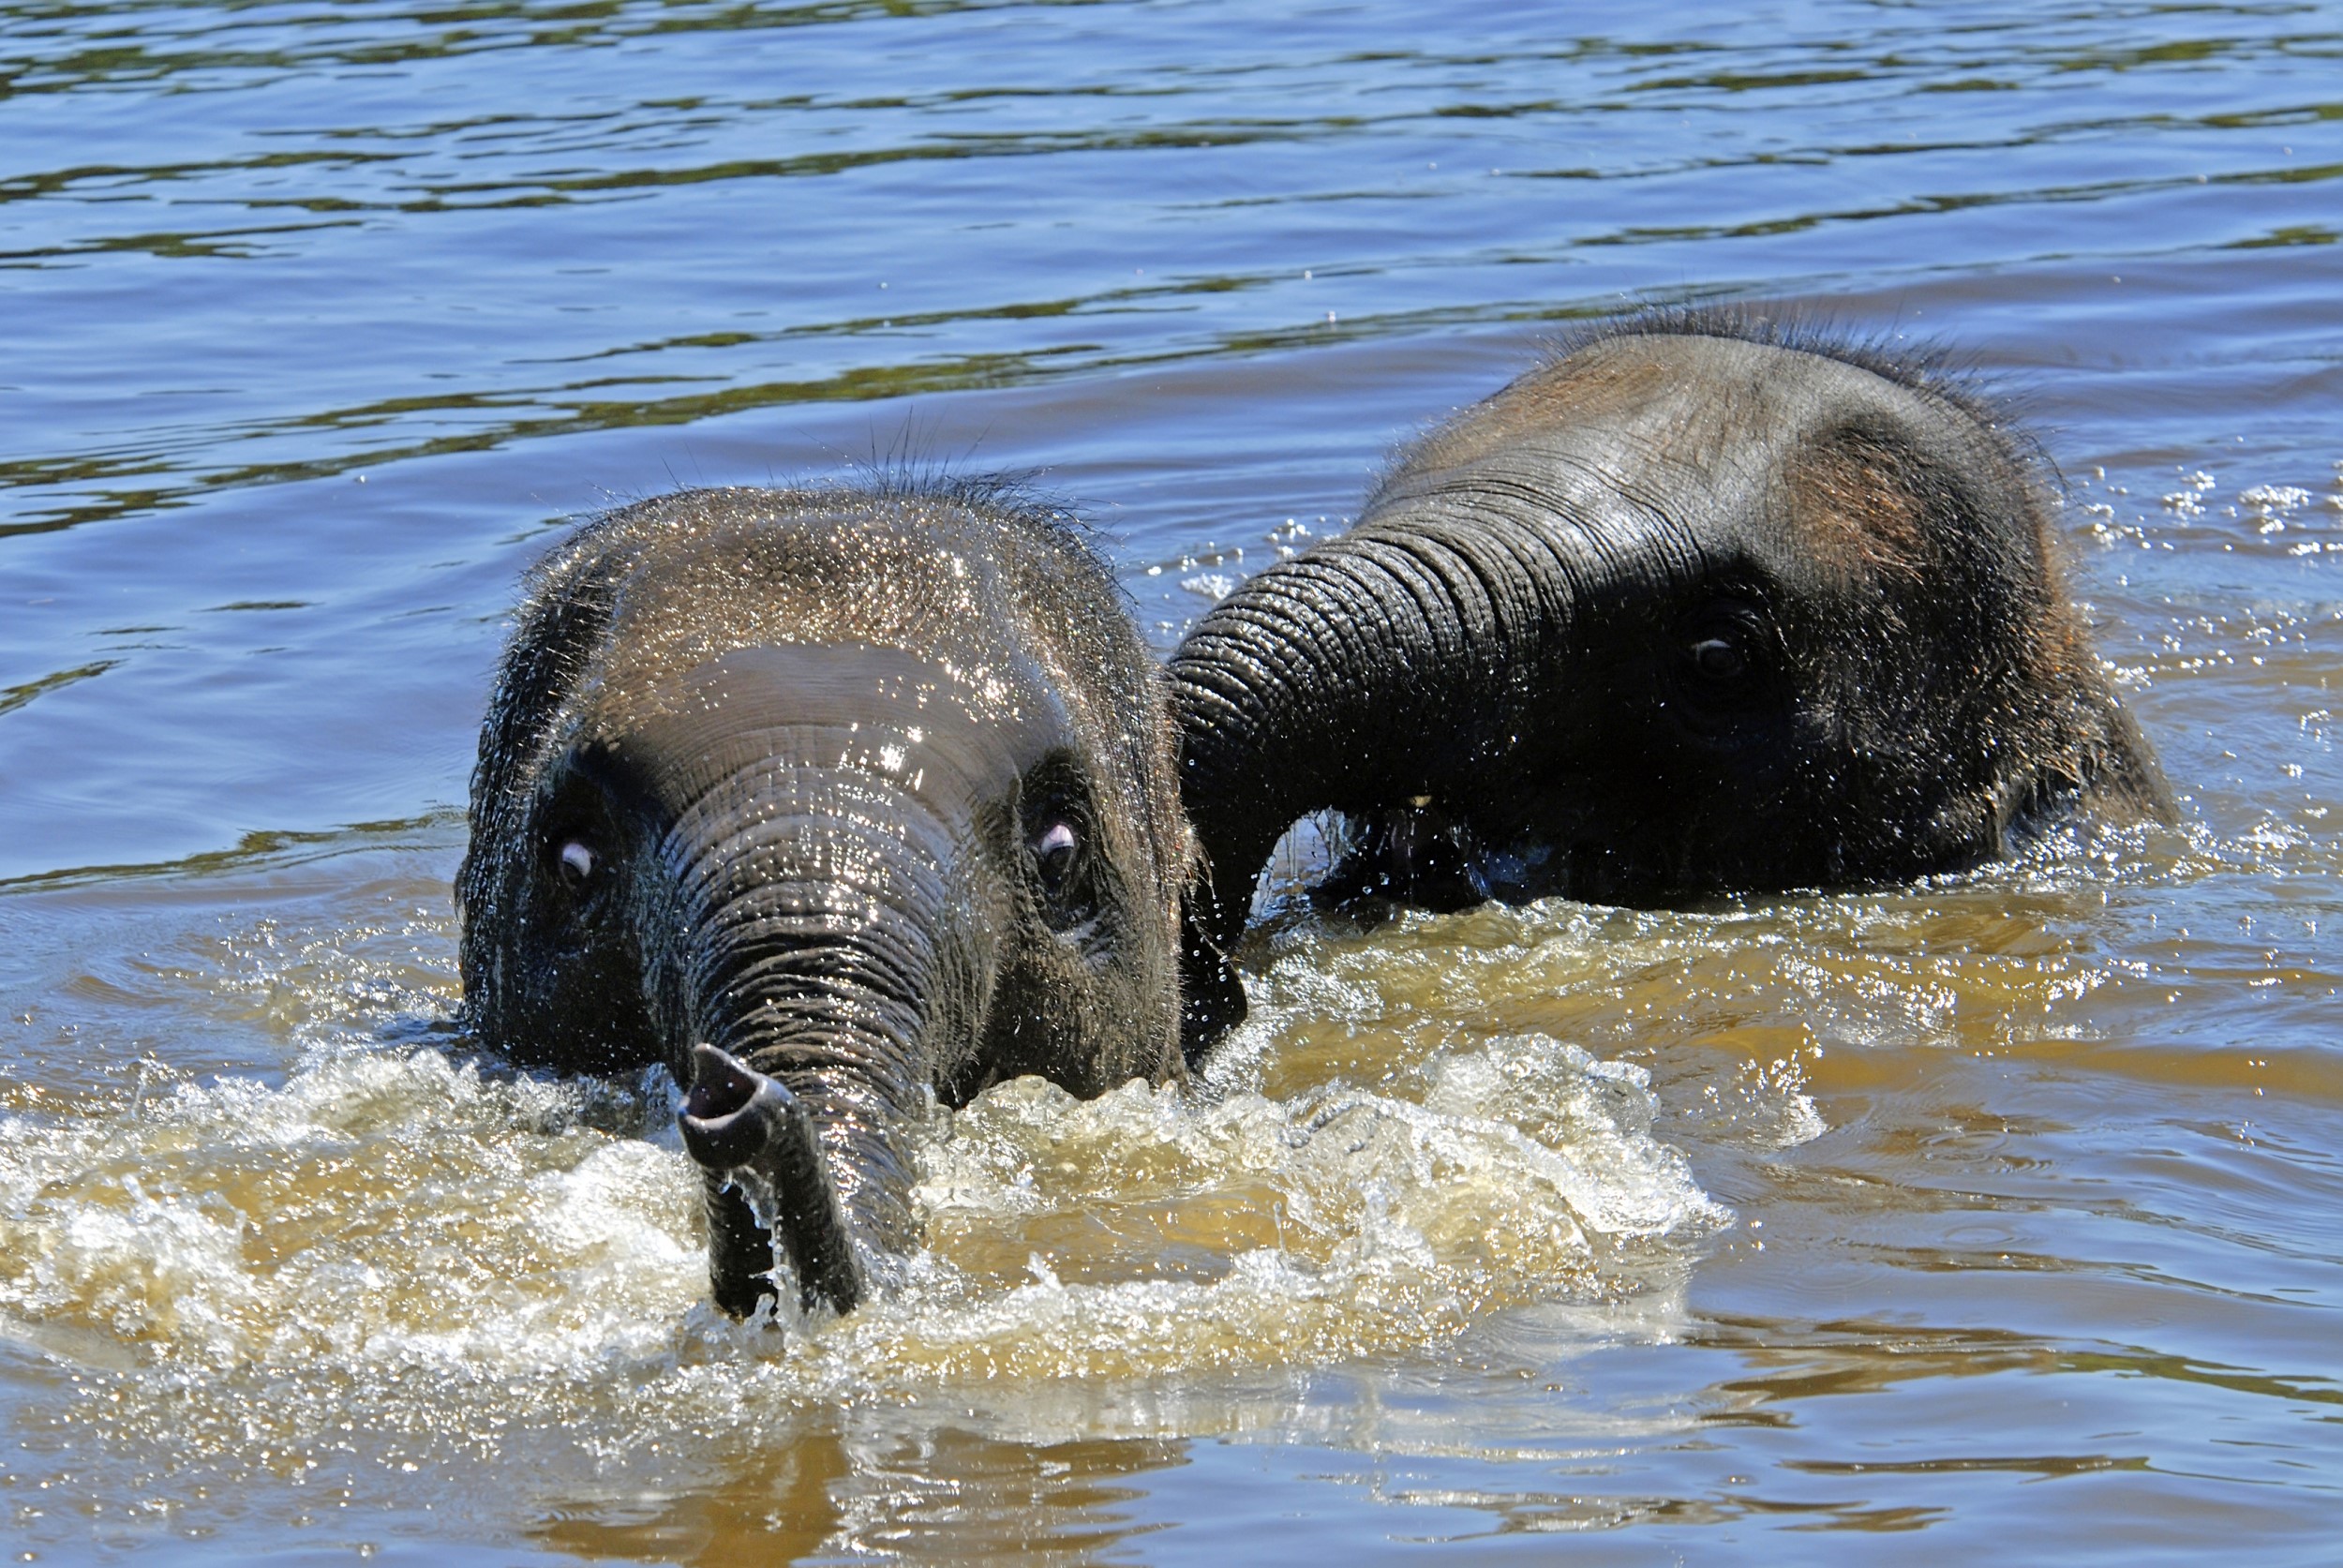 Home Sri Lanka Istock rondreis vakantie original Asia olifant gal oya zwemmende